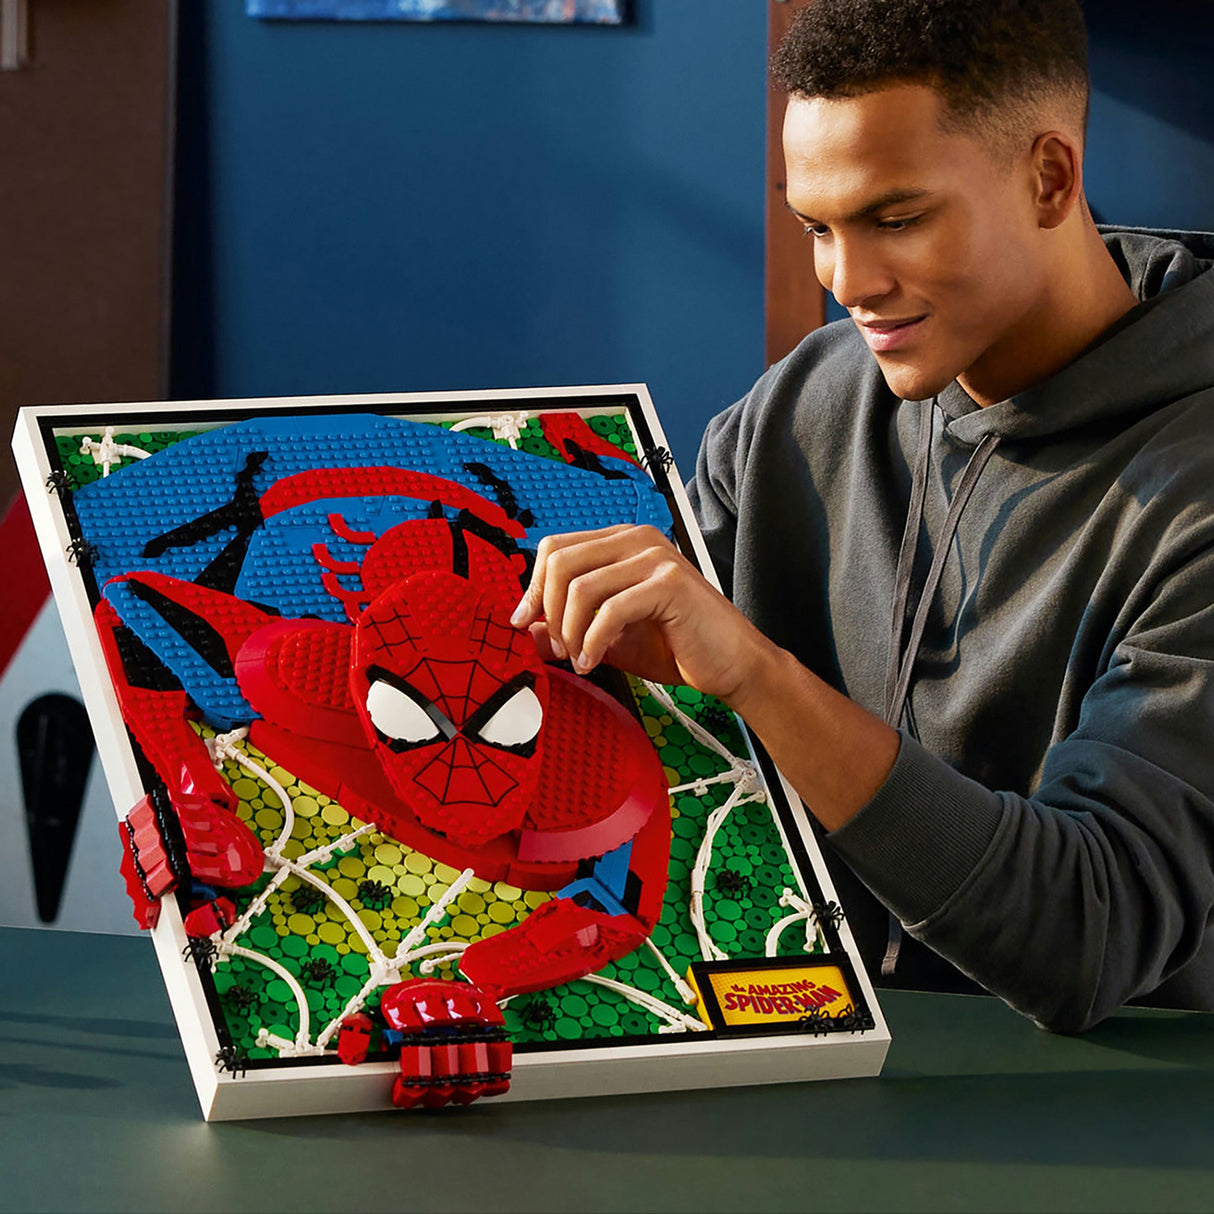 LEGO Art The Amazing Spider-Man 31209 (2099 pieces)